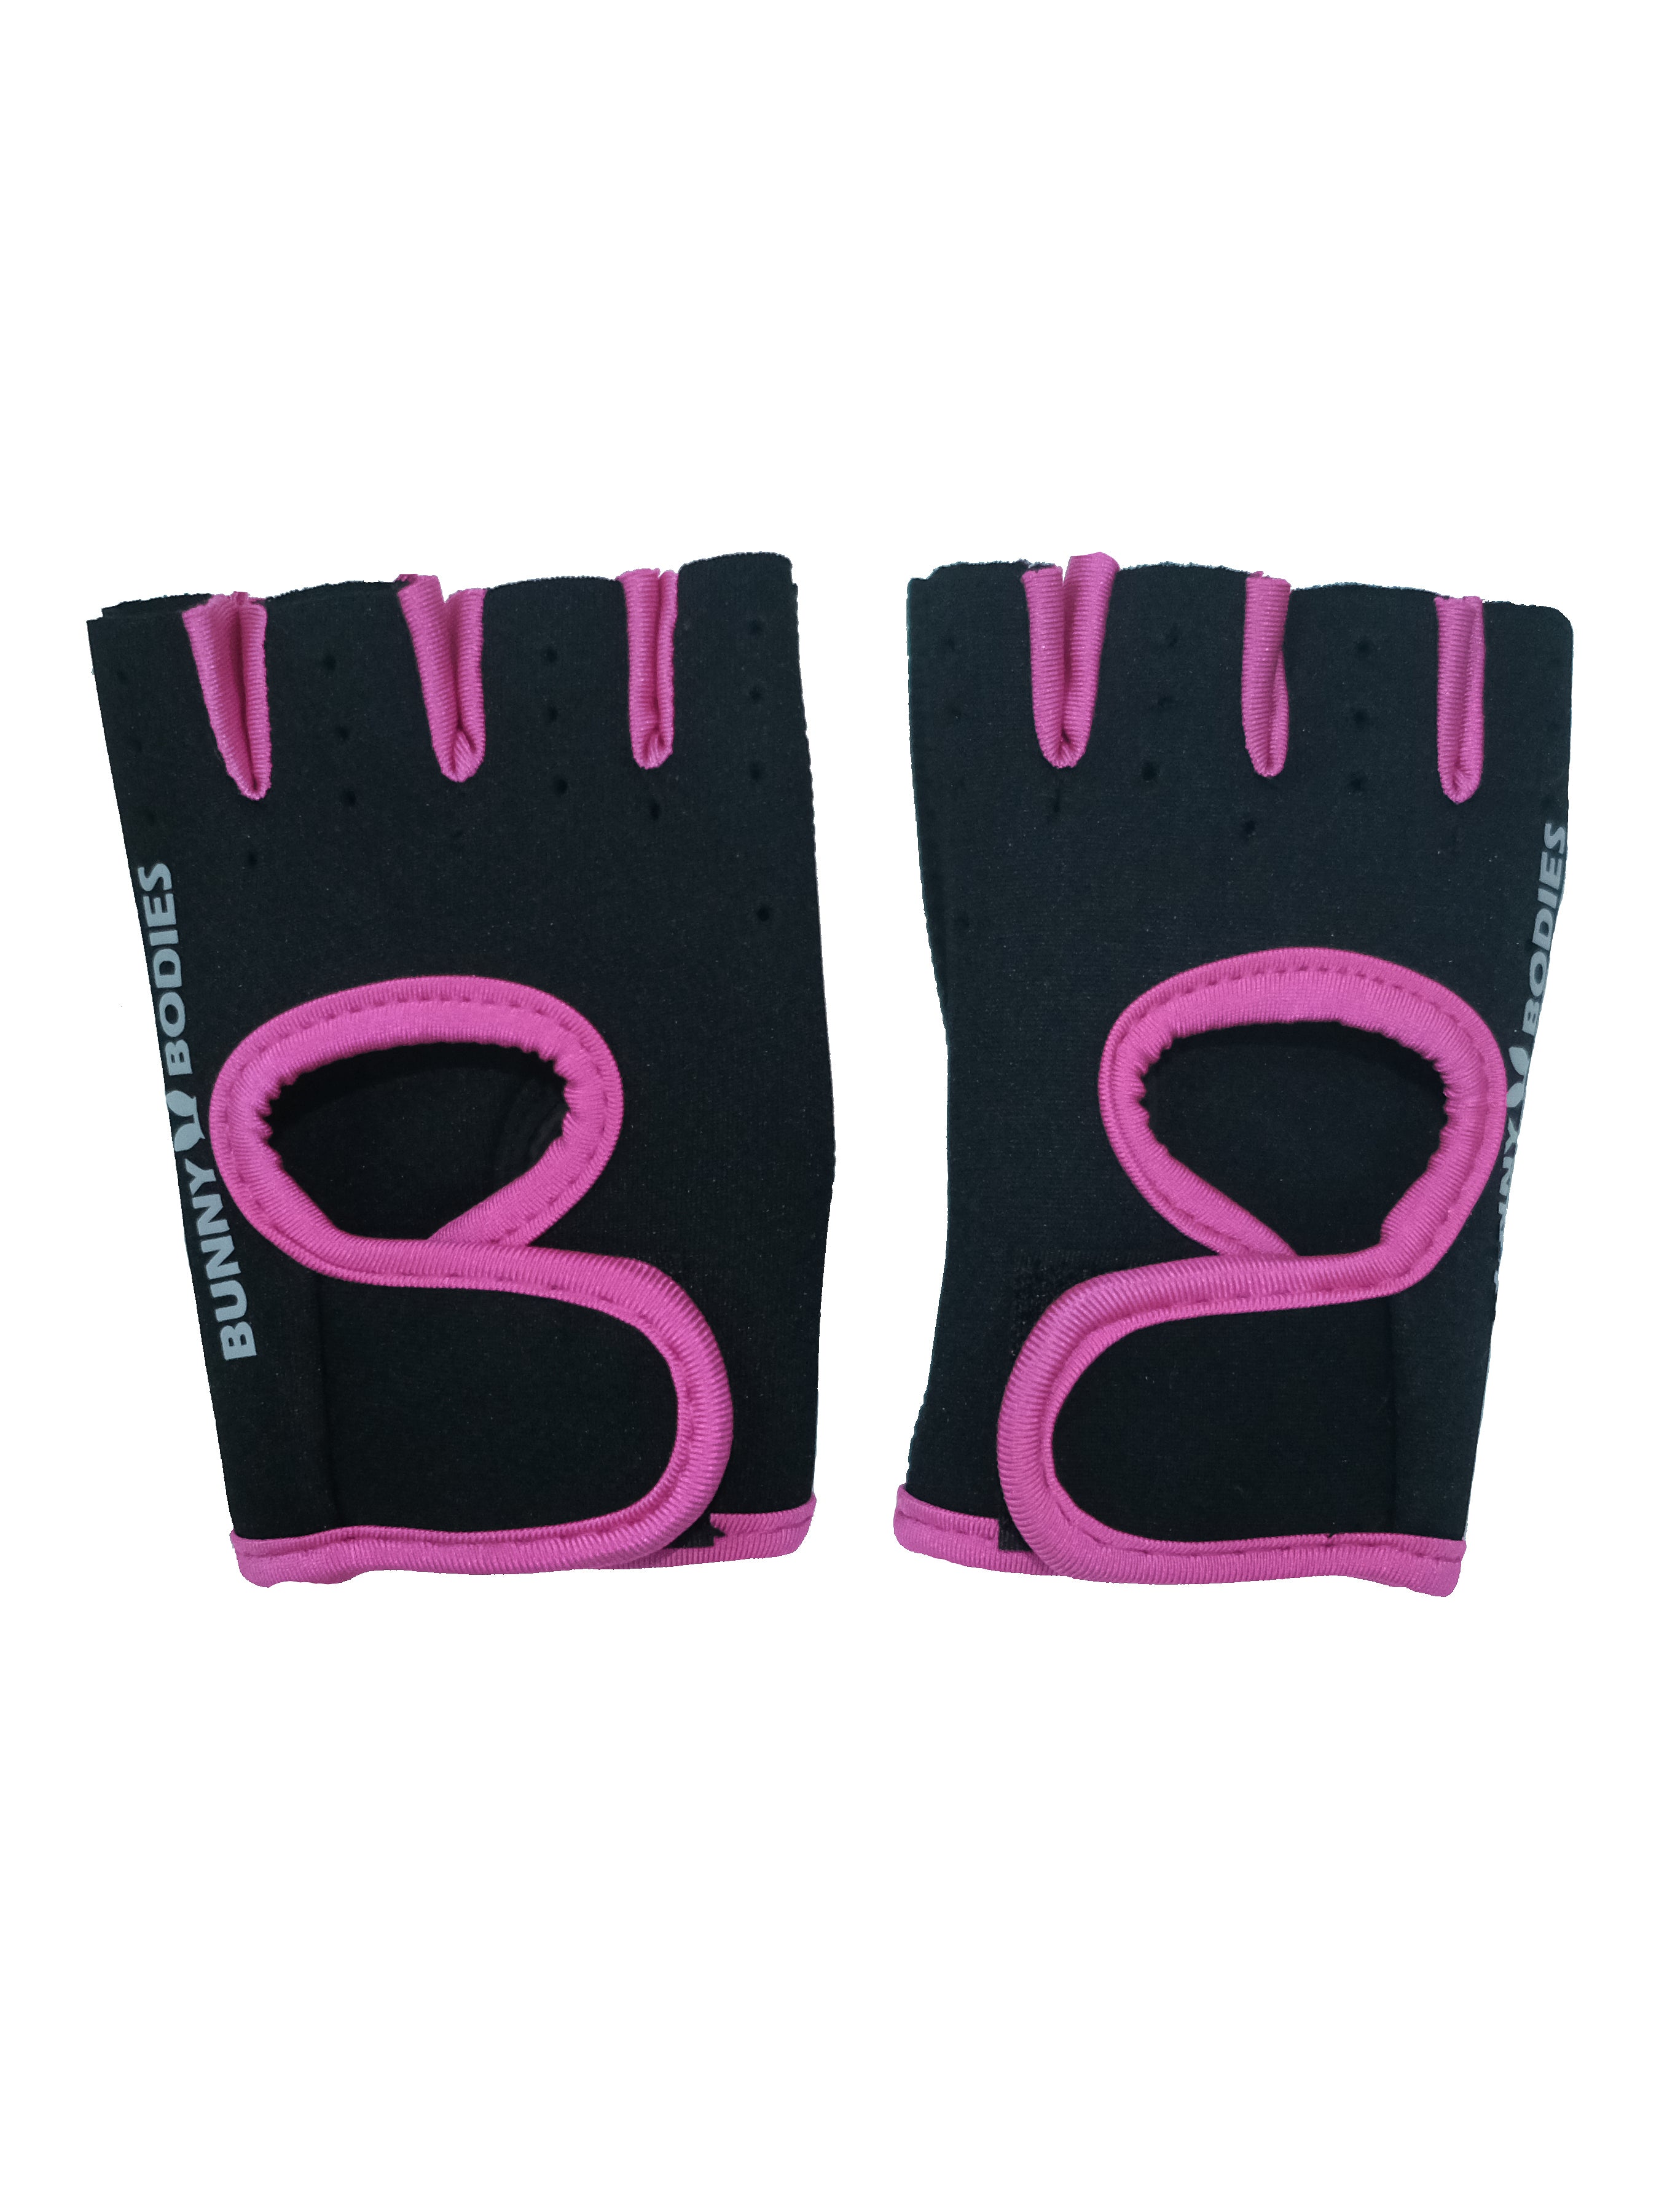 Gym Gloves ver. 2 - Pink